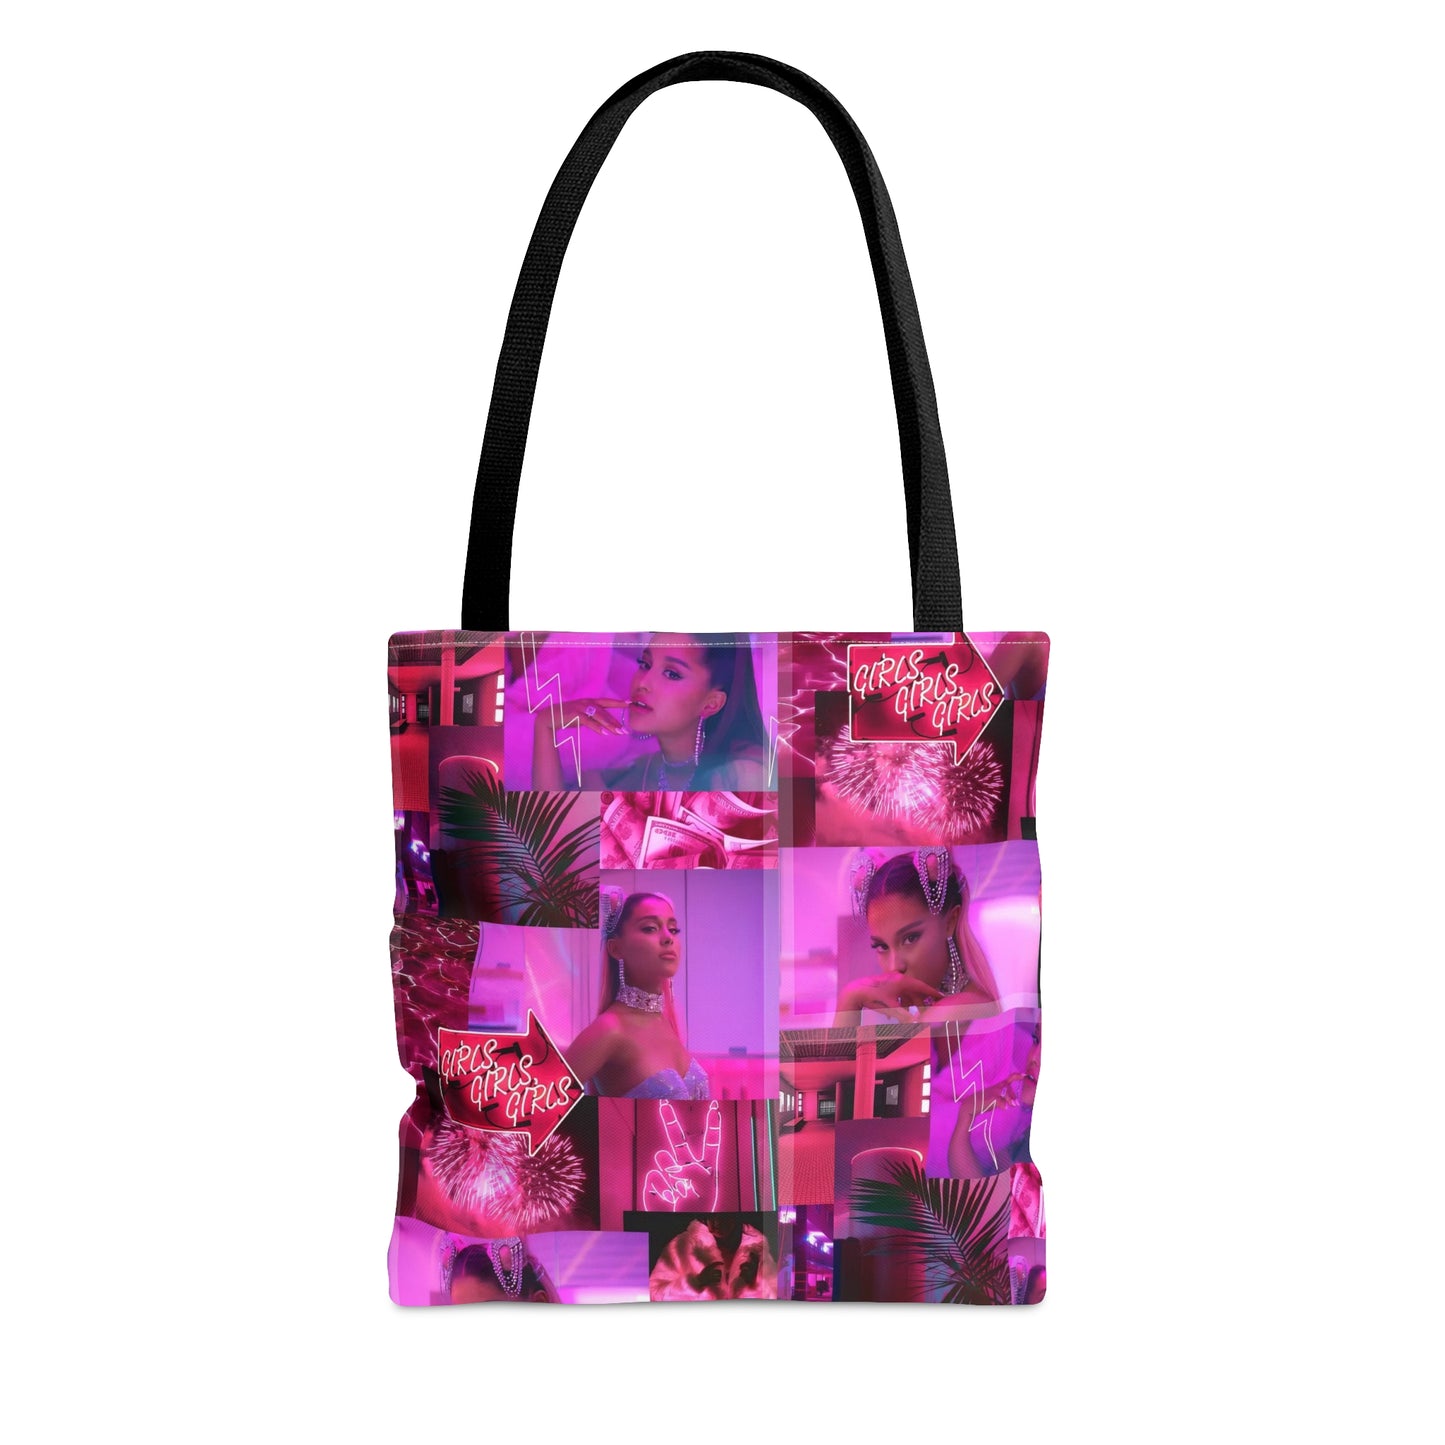 Ariana Grande 7 Rings Collage Tote Bag